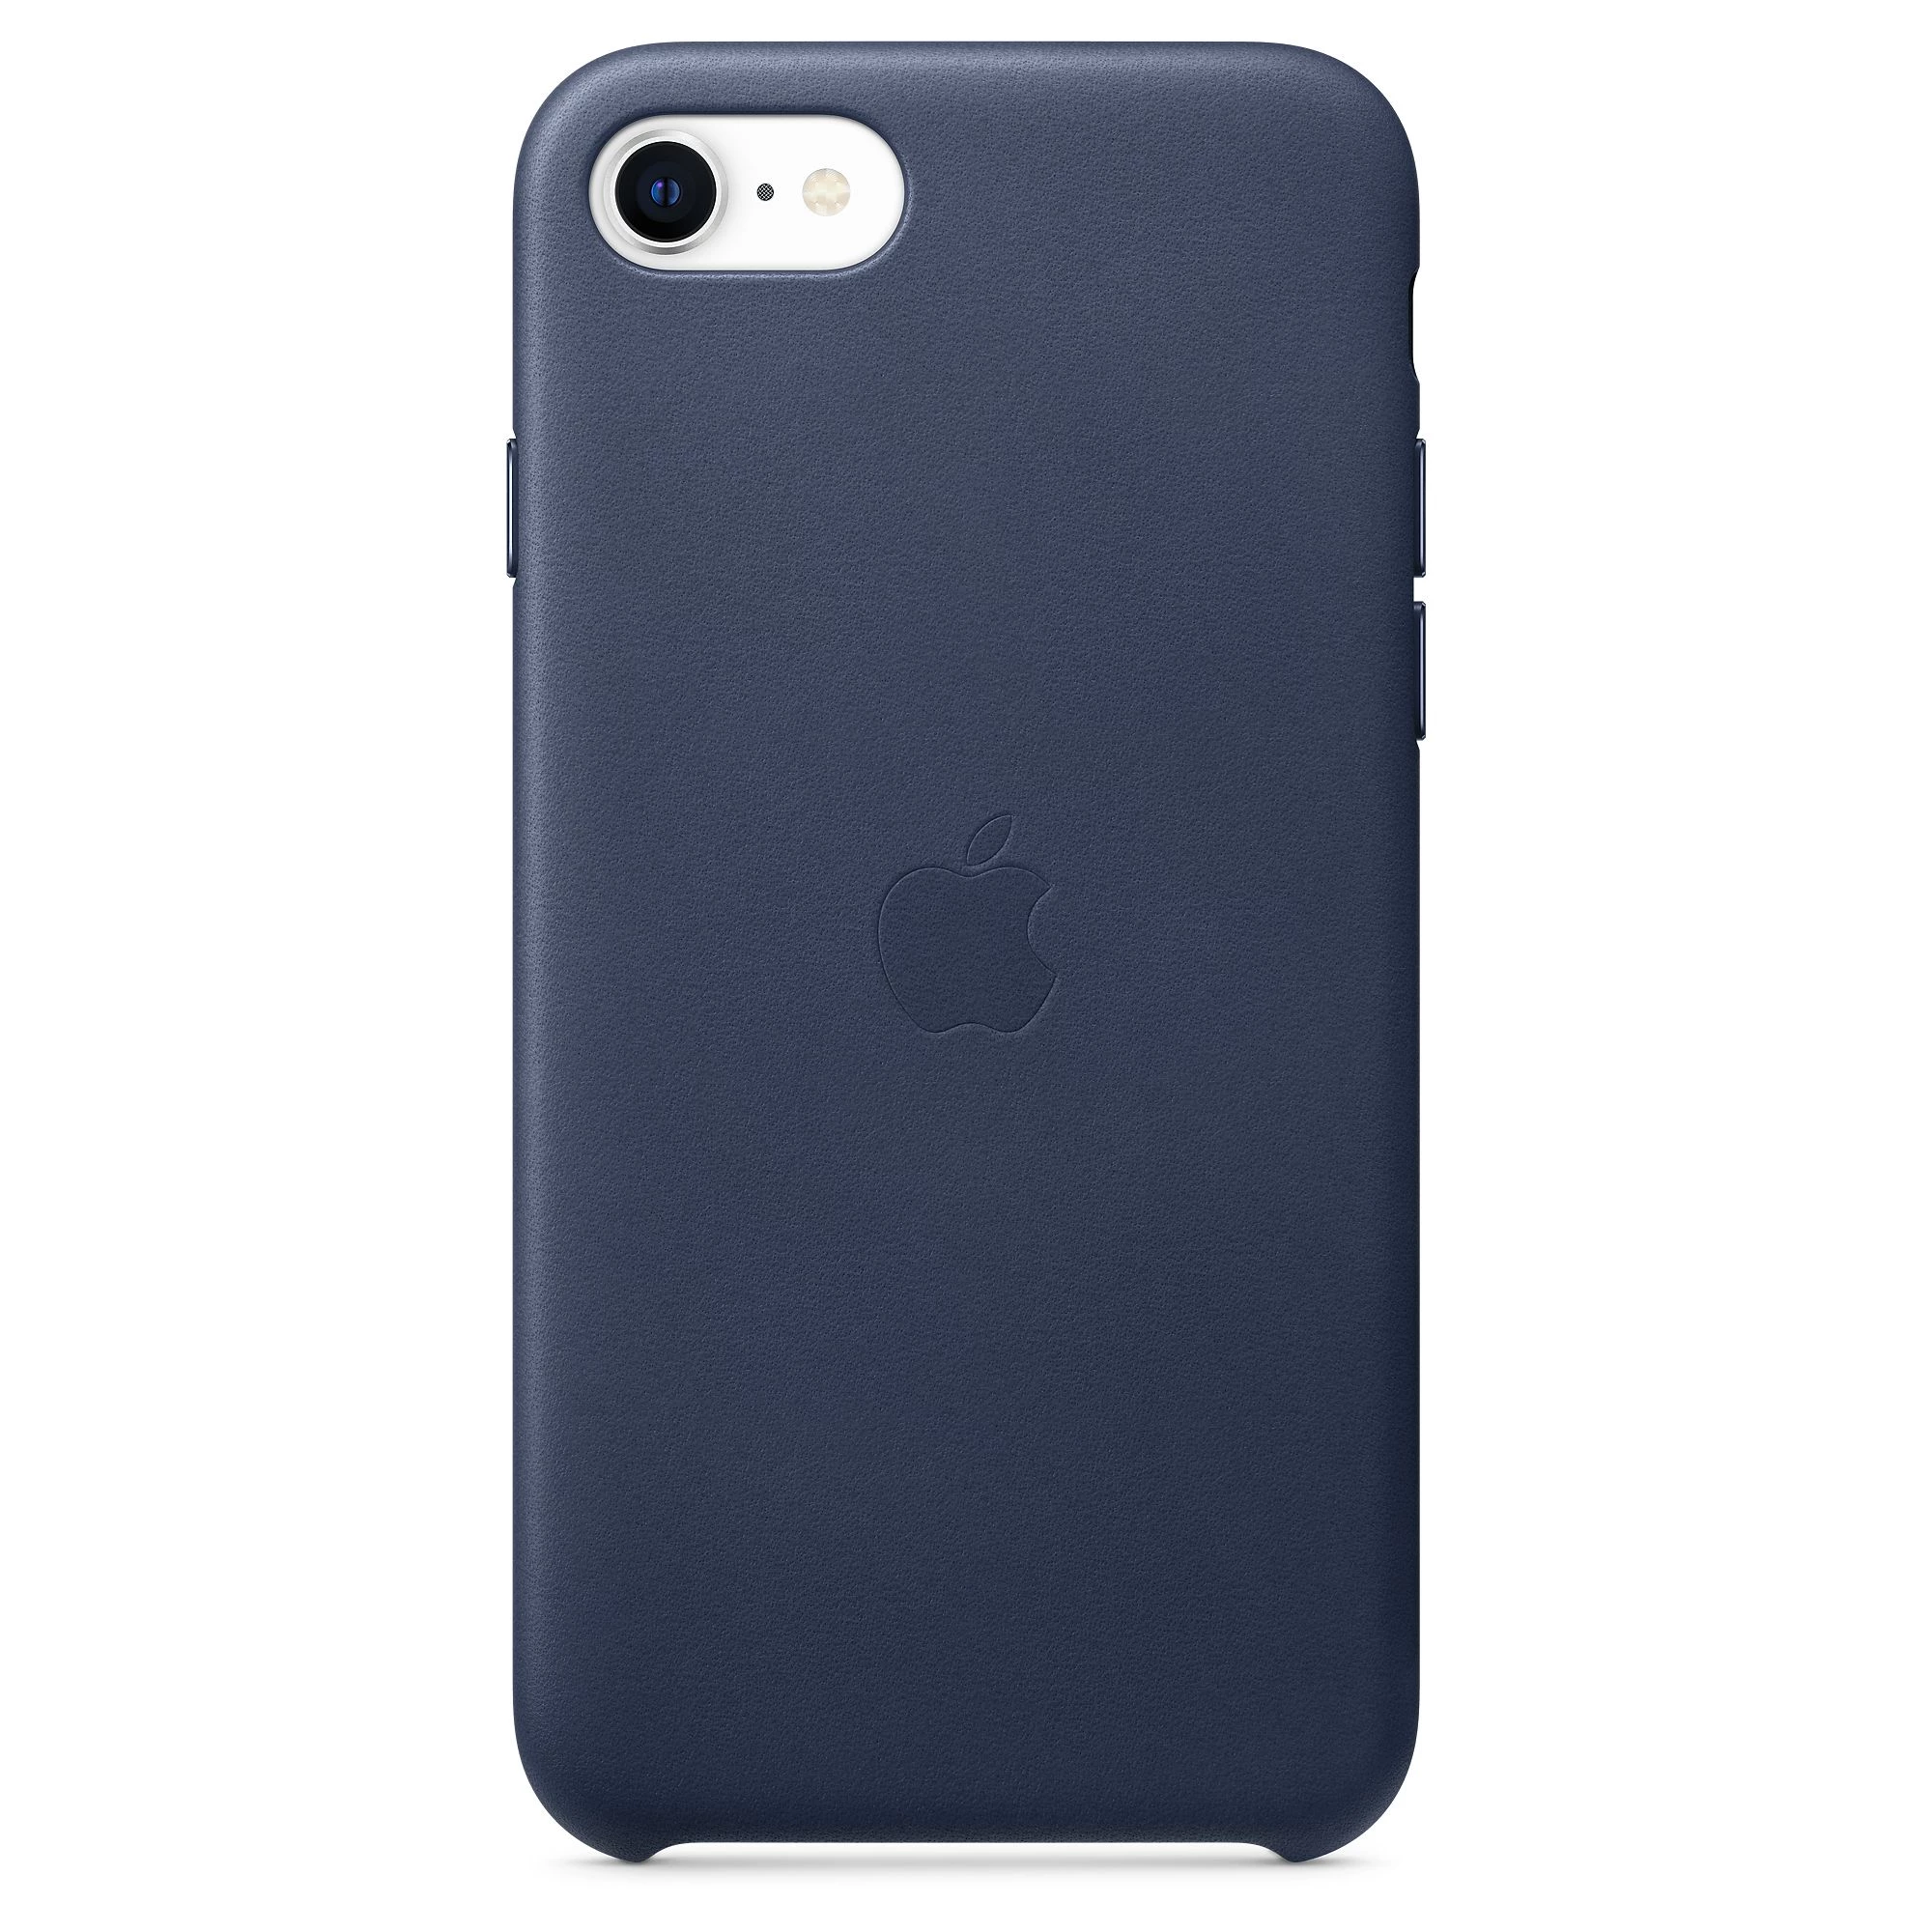 Apple iPhone SE Leather Case - Midnight Blue (MXYN2)